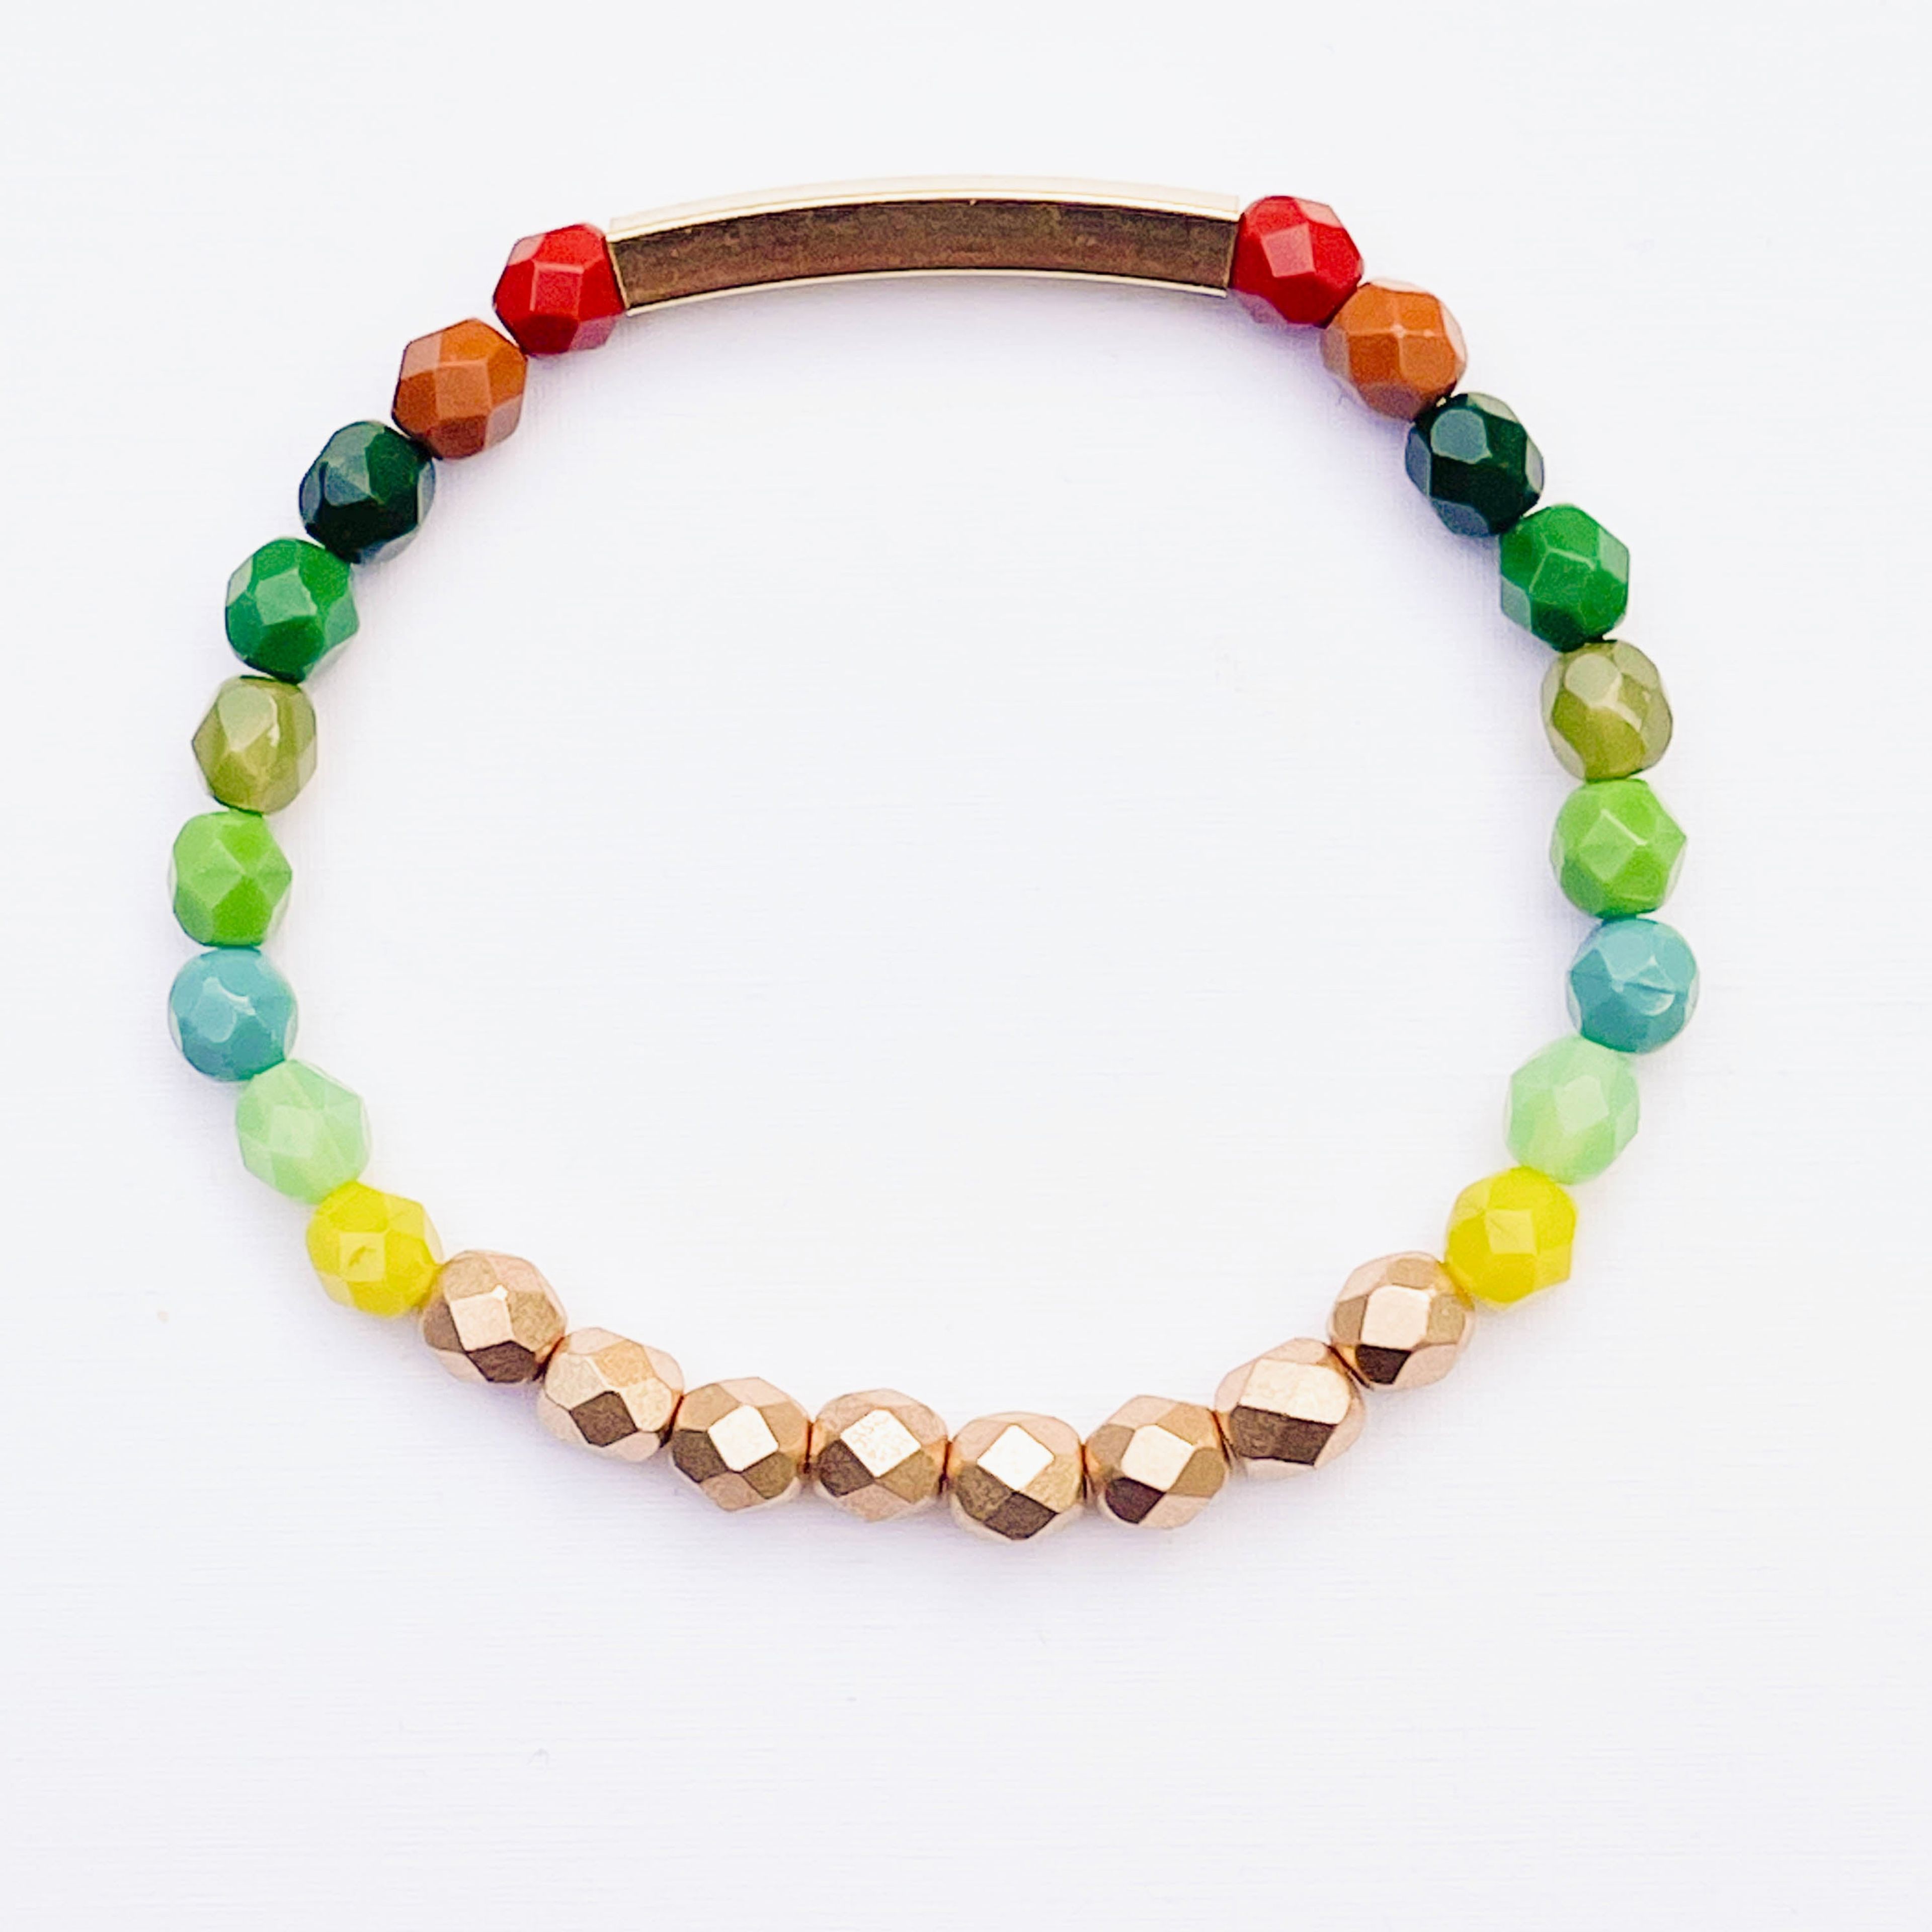 Colorful Ombre Bead Bracelet